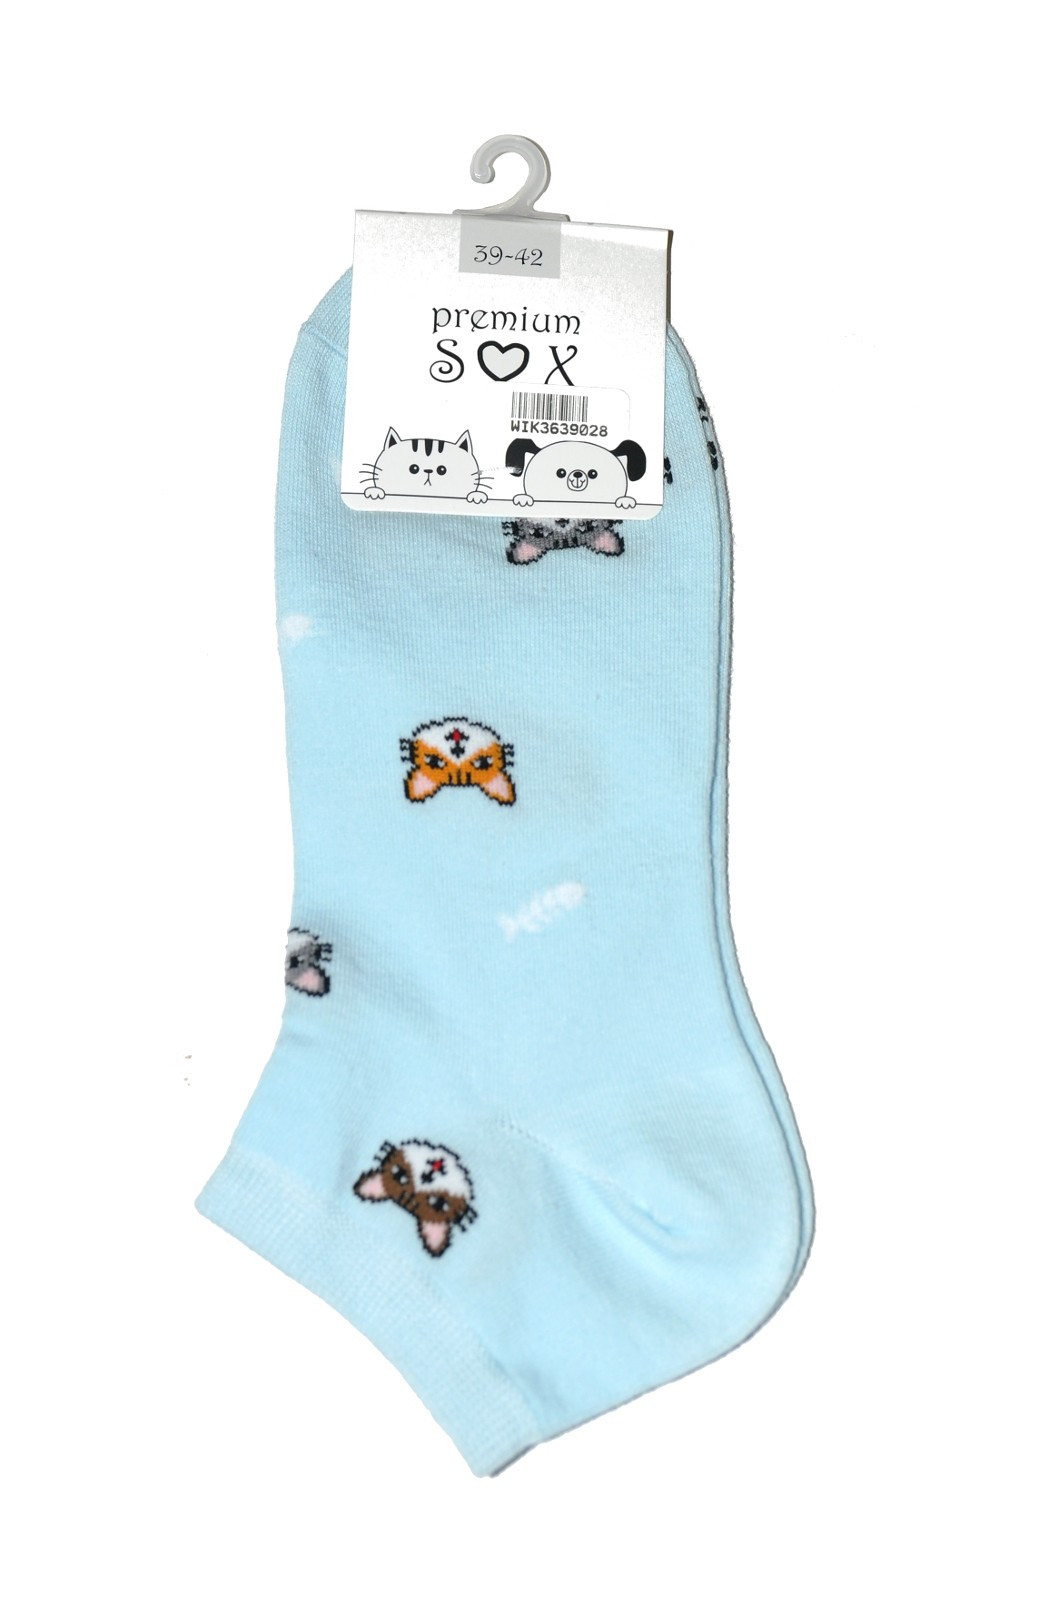 Dámské ponožky WiK 36390 Premium Sox 35-42 tmavě modrá 39-42